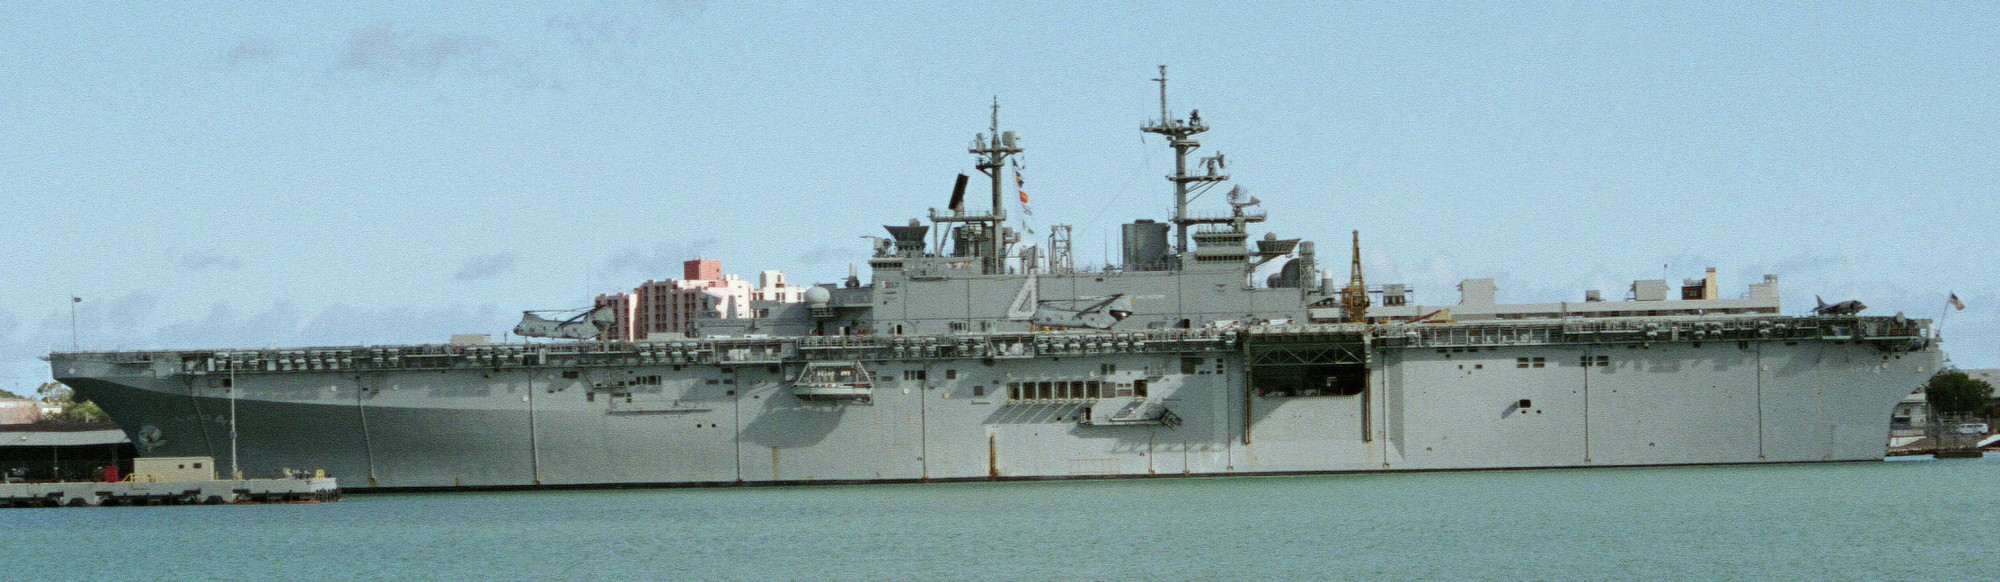 lhd-4 uss boxer wasp class amphibious assault ship dock landing us navy exercise rimpac 2000 pearl harbor hawaii 11